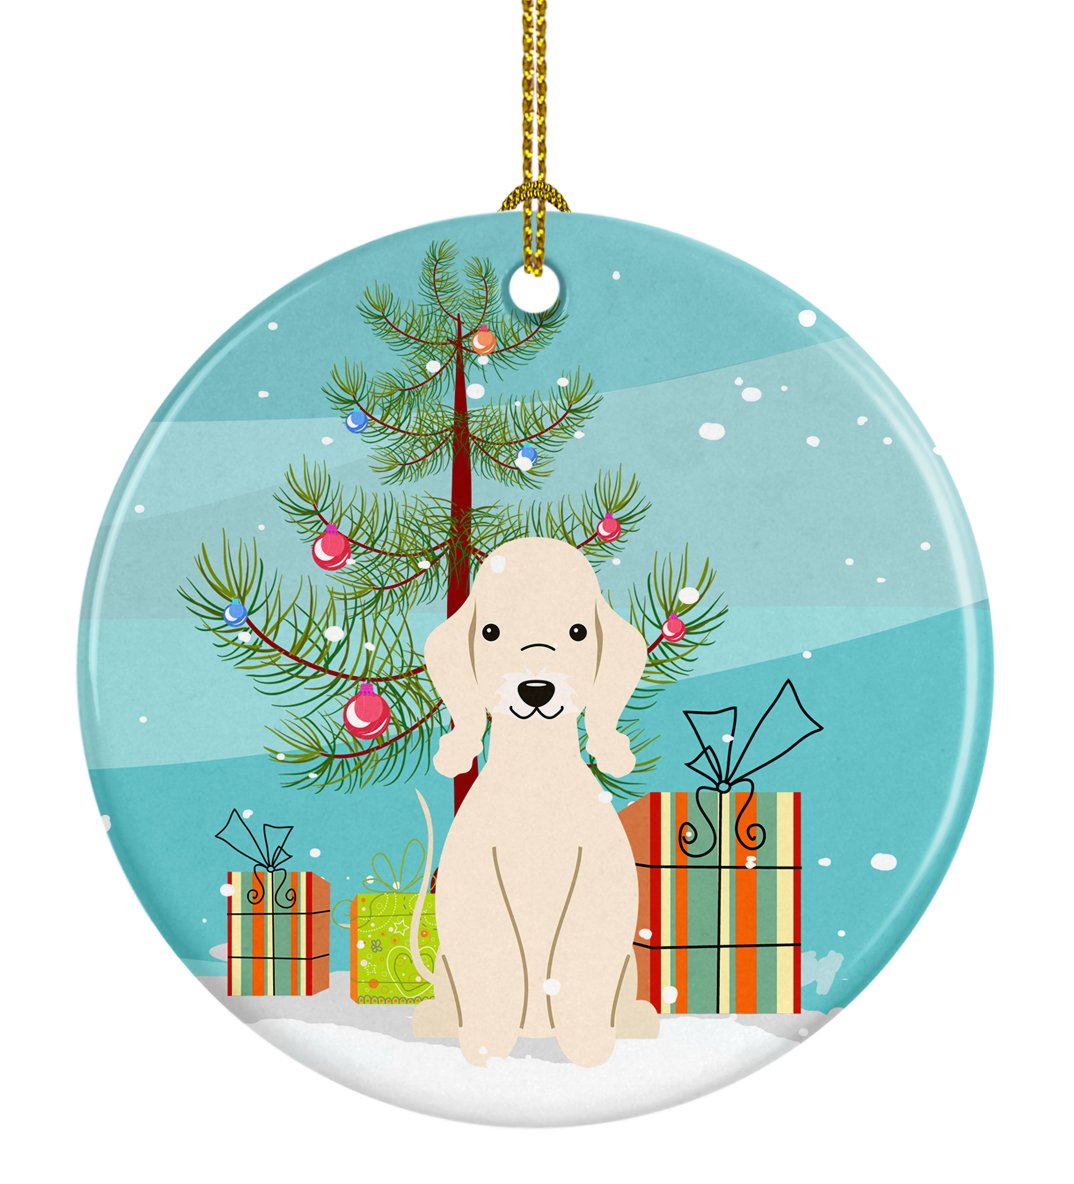 Merry Christmas Tree Bedlington Terrier Sandy Ceramic Ornament BB4216CO1 by Caroline's Treasures